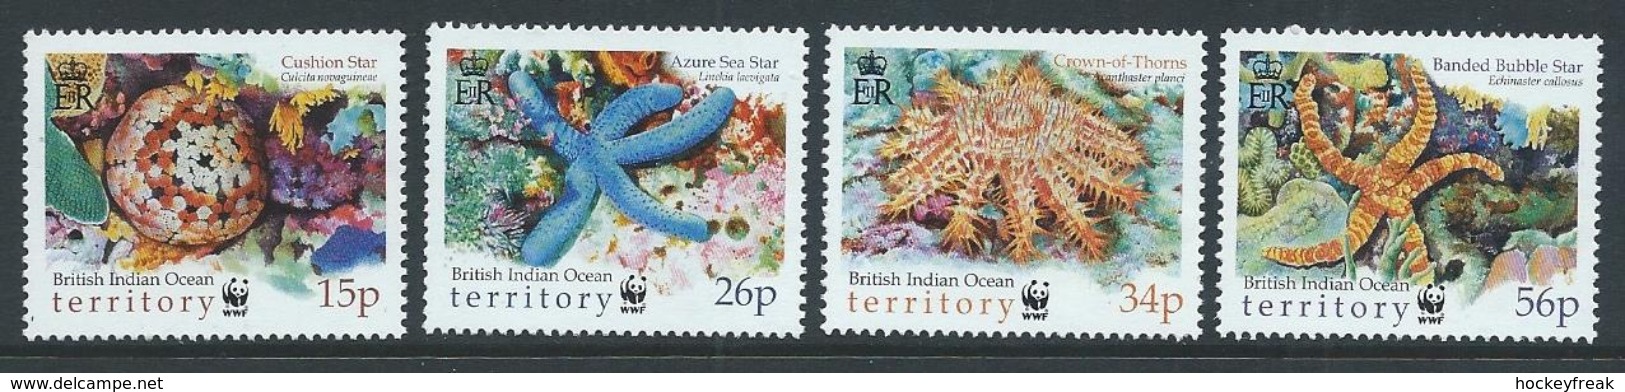 British Indian Ocean Territory 2001 - Endangered Species - Seastars SG253-256 MNH Cat £7.90 - Britisches Territorium Im Indischen Ozean